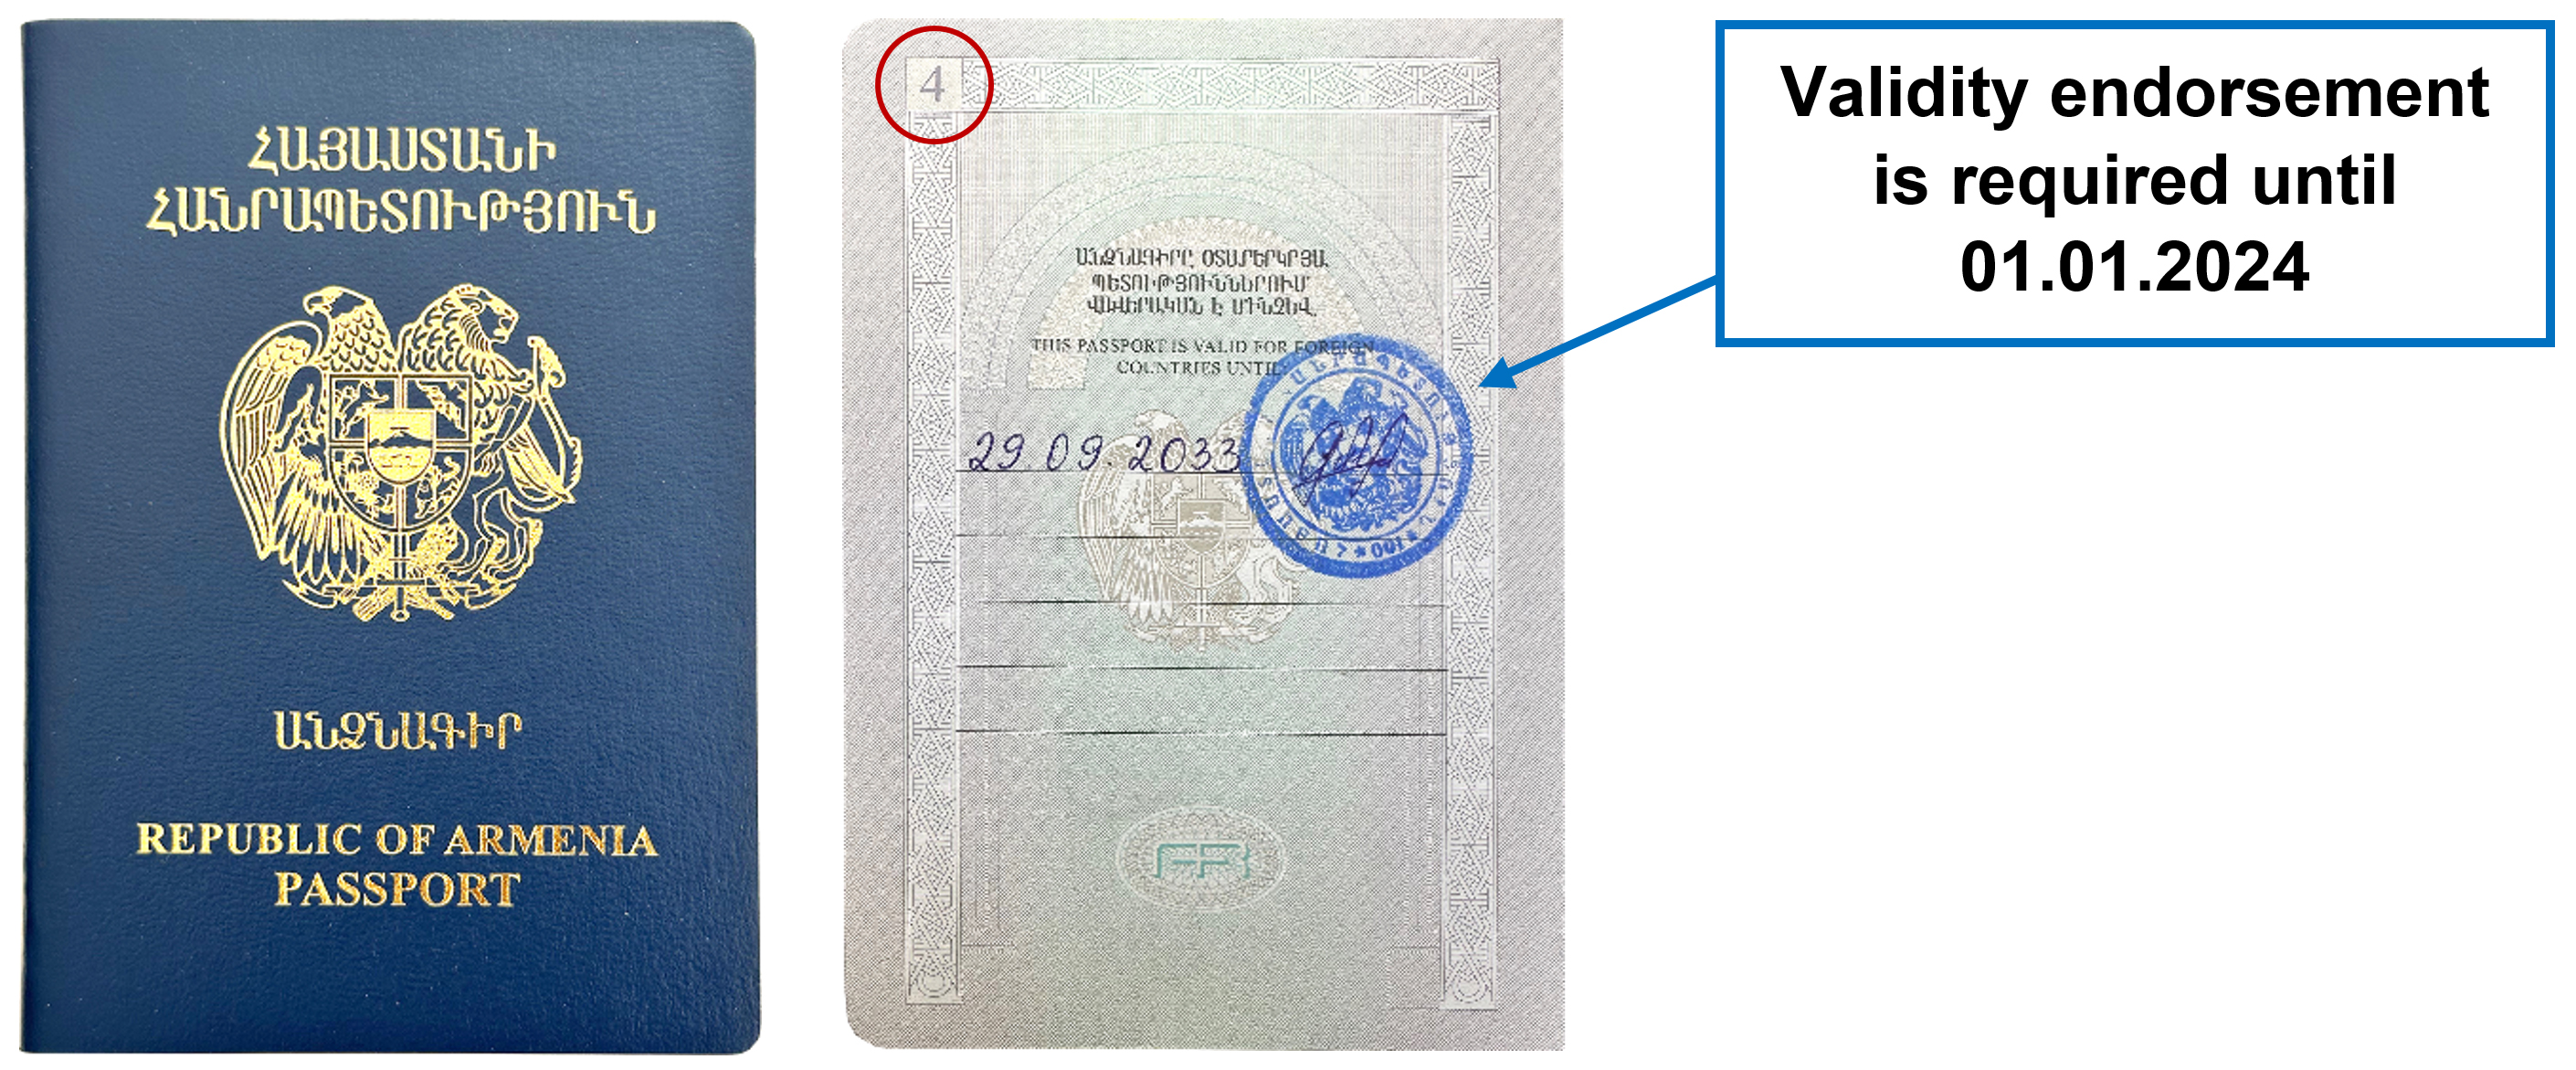 passport1.jpg (1.45 MB)